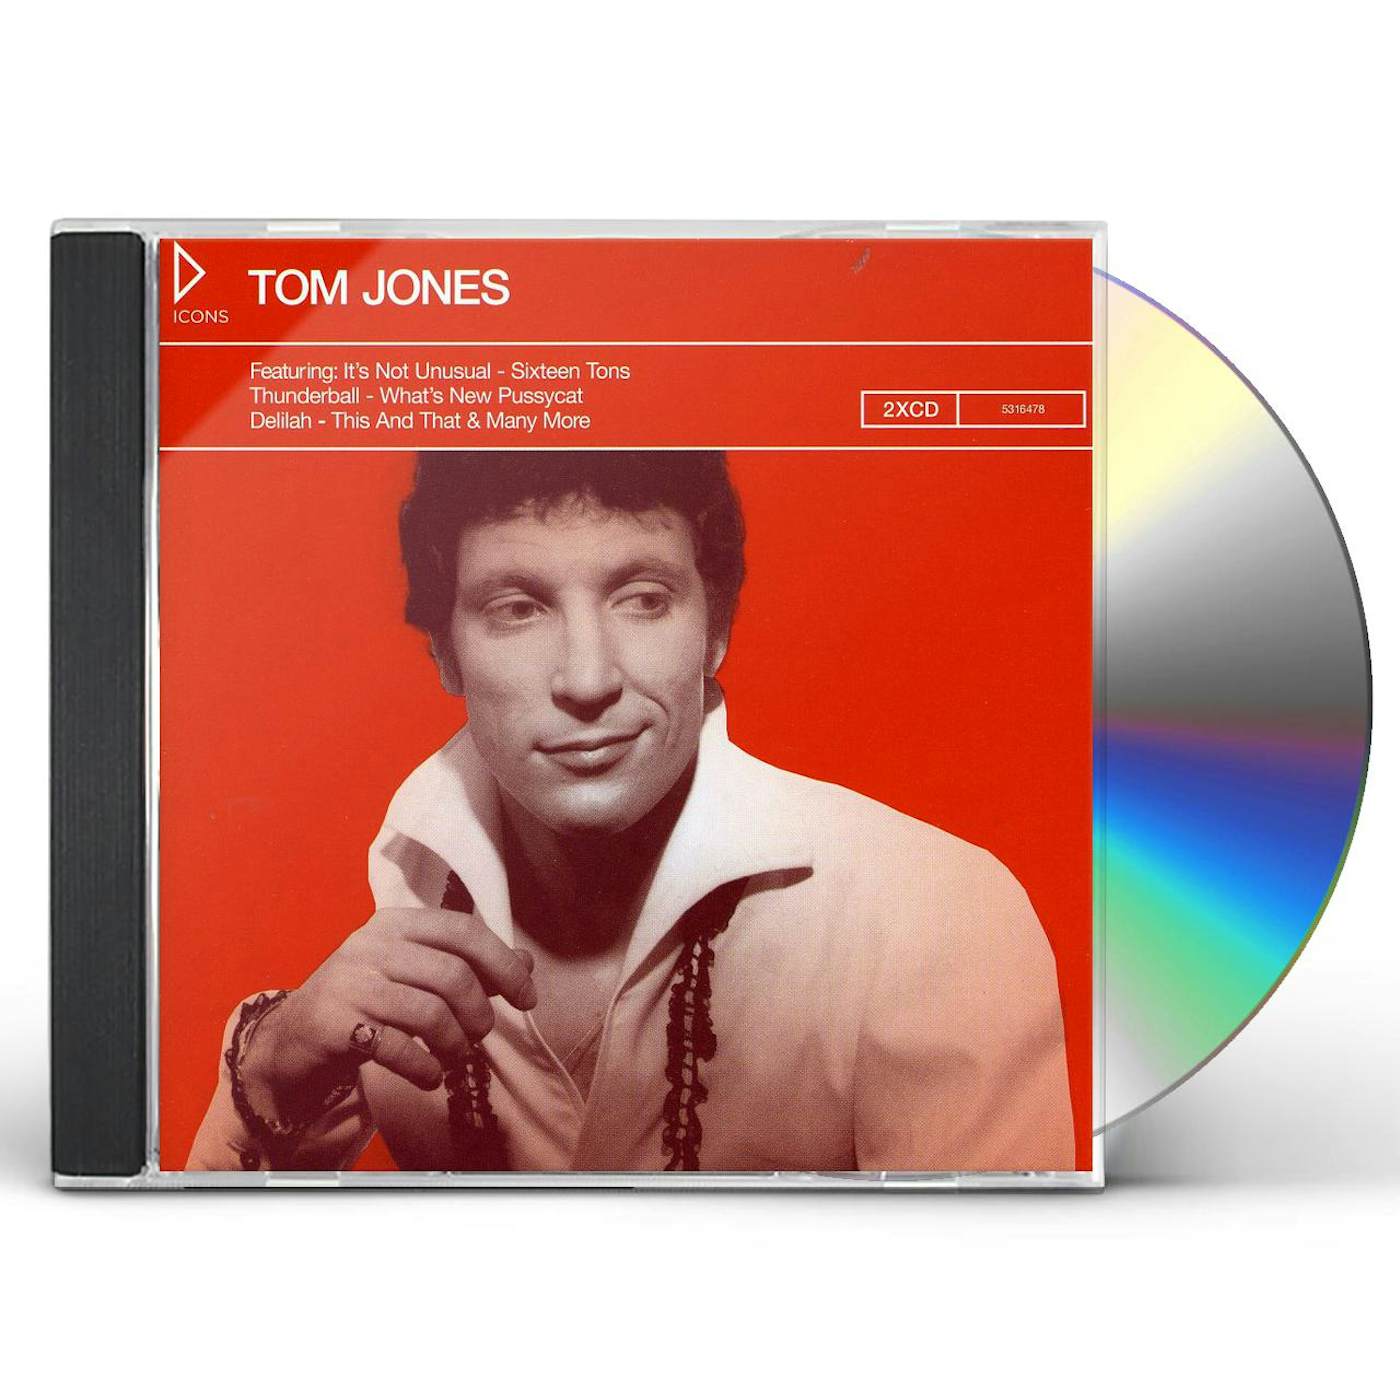 ICONS: TOM JONES CD